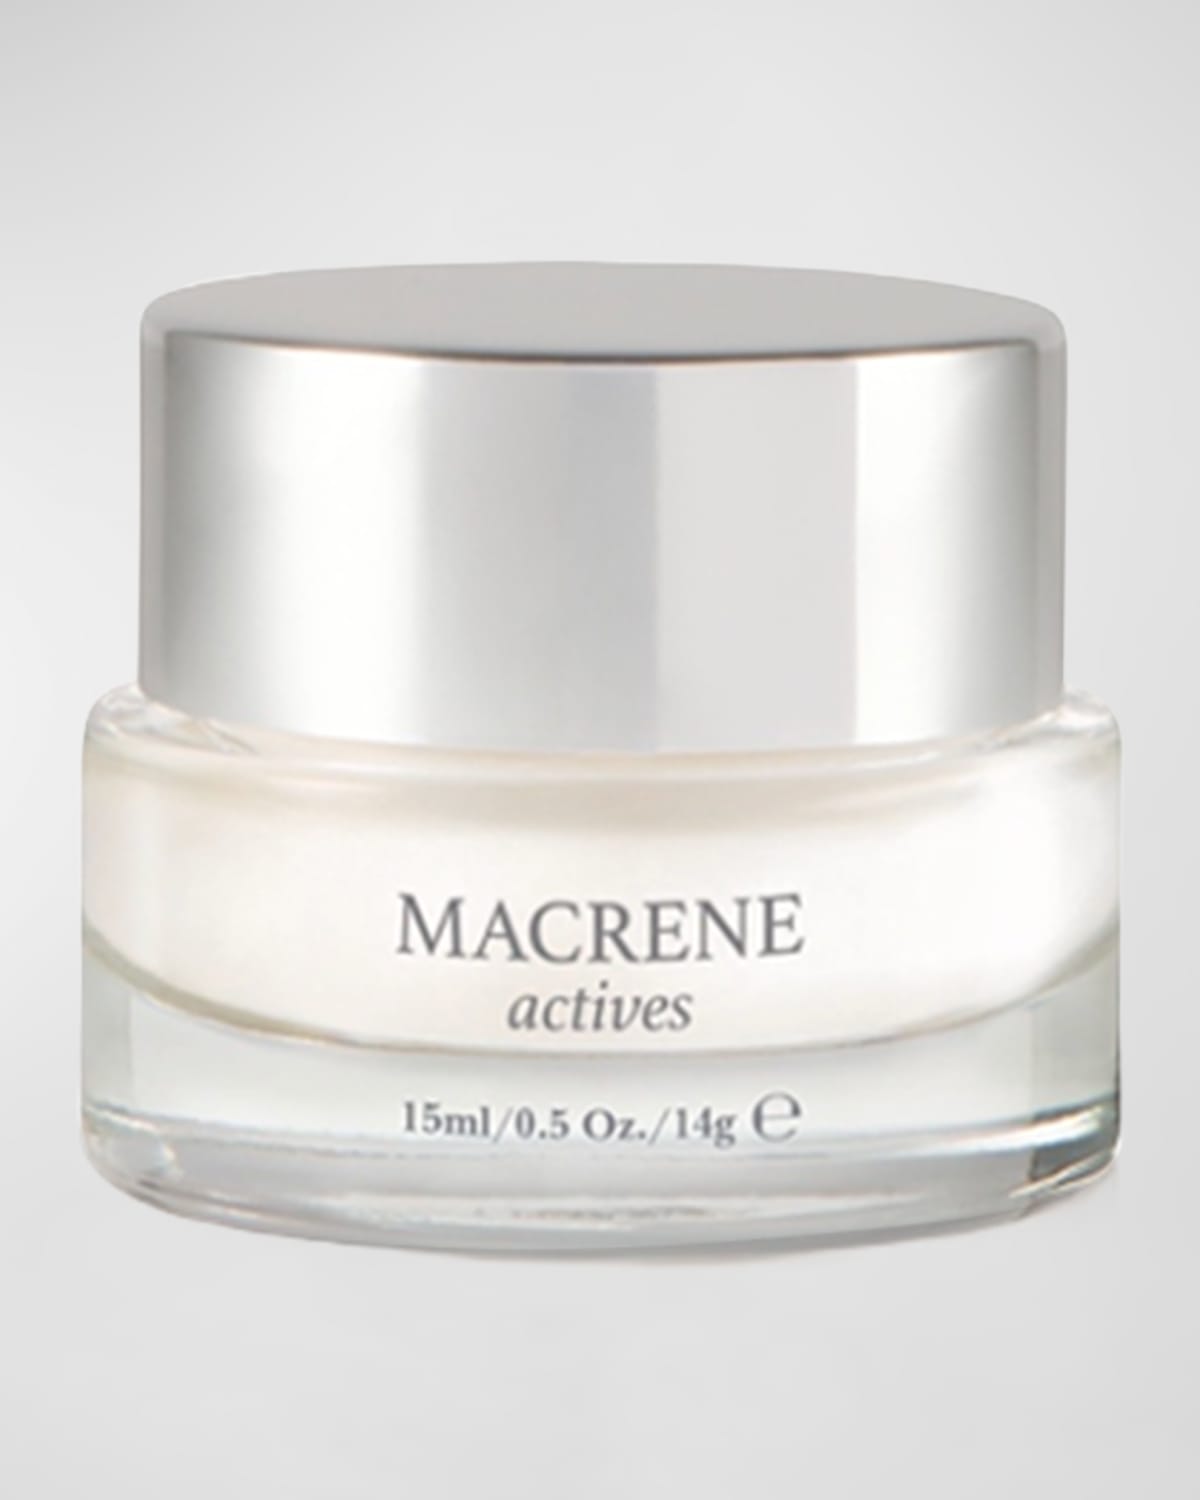 Macrene Actives High Performance Eye Cream, 0.5 oz.